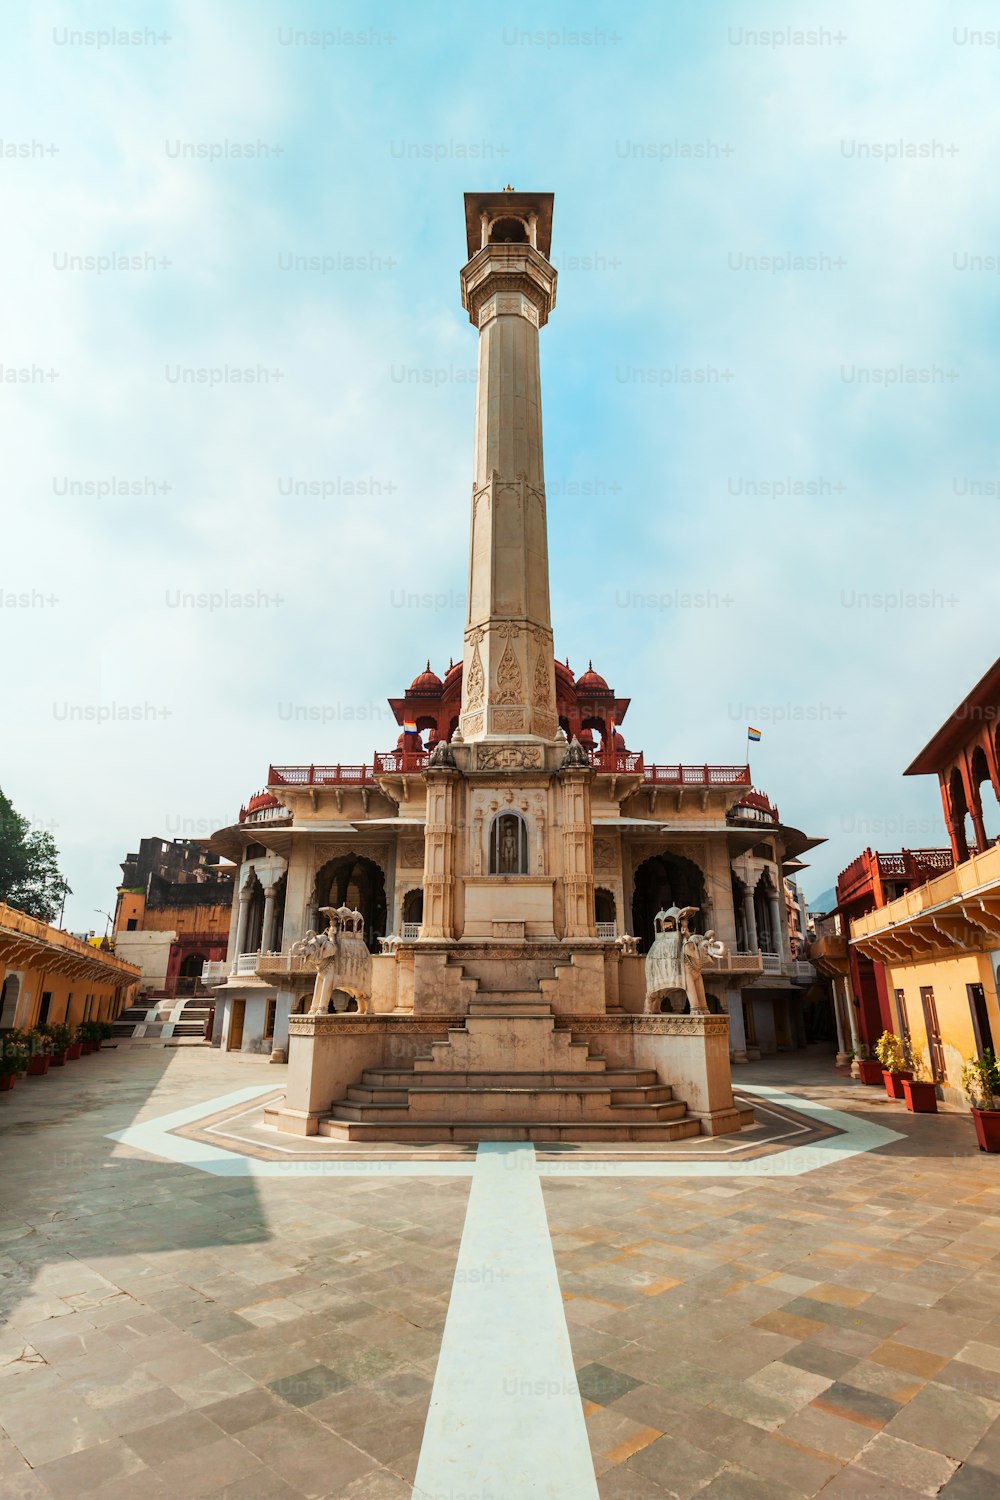 Digamber Jain Temple 또는 Soniji Ki Nasiyan은 인도 라자스탄 주 아지 메르시의 주요 자이나교 사원입니다